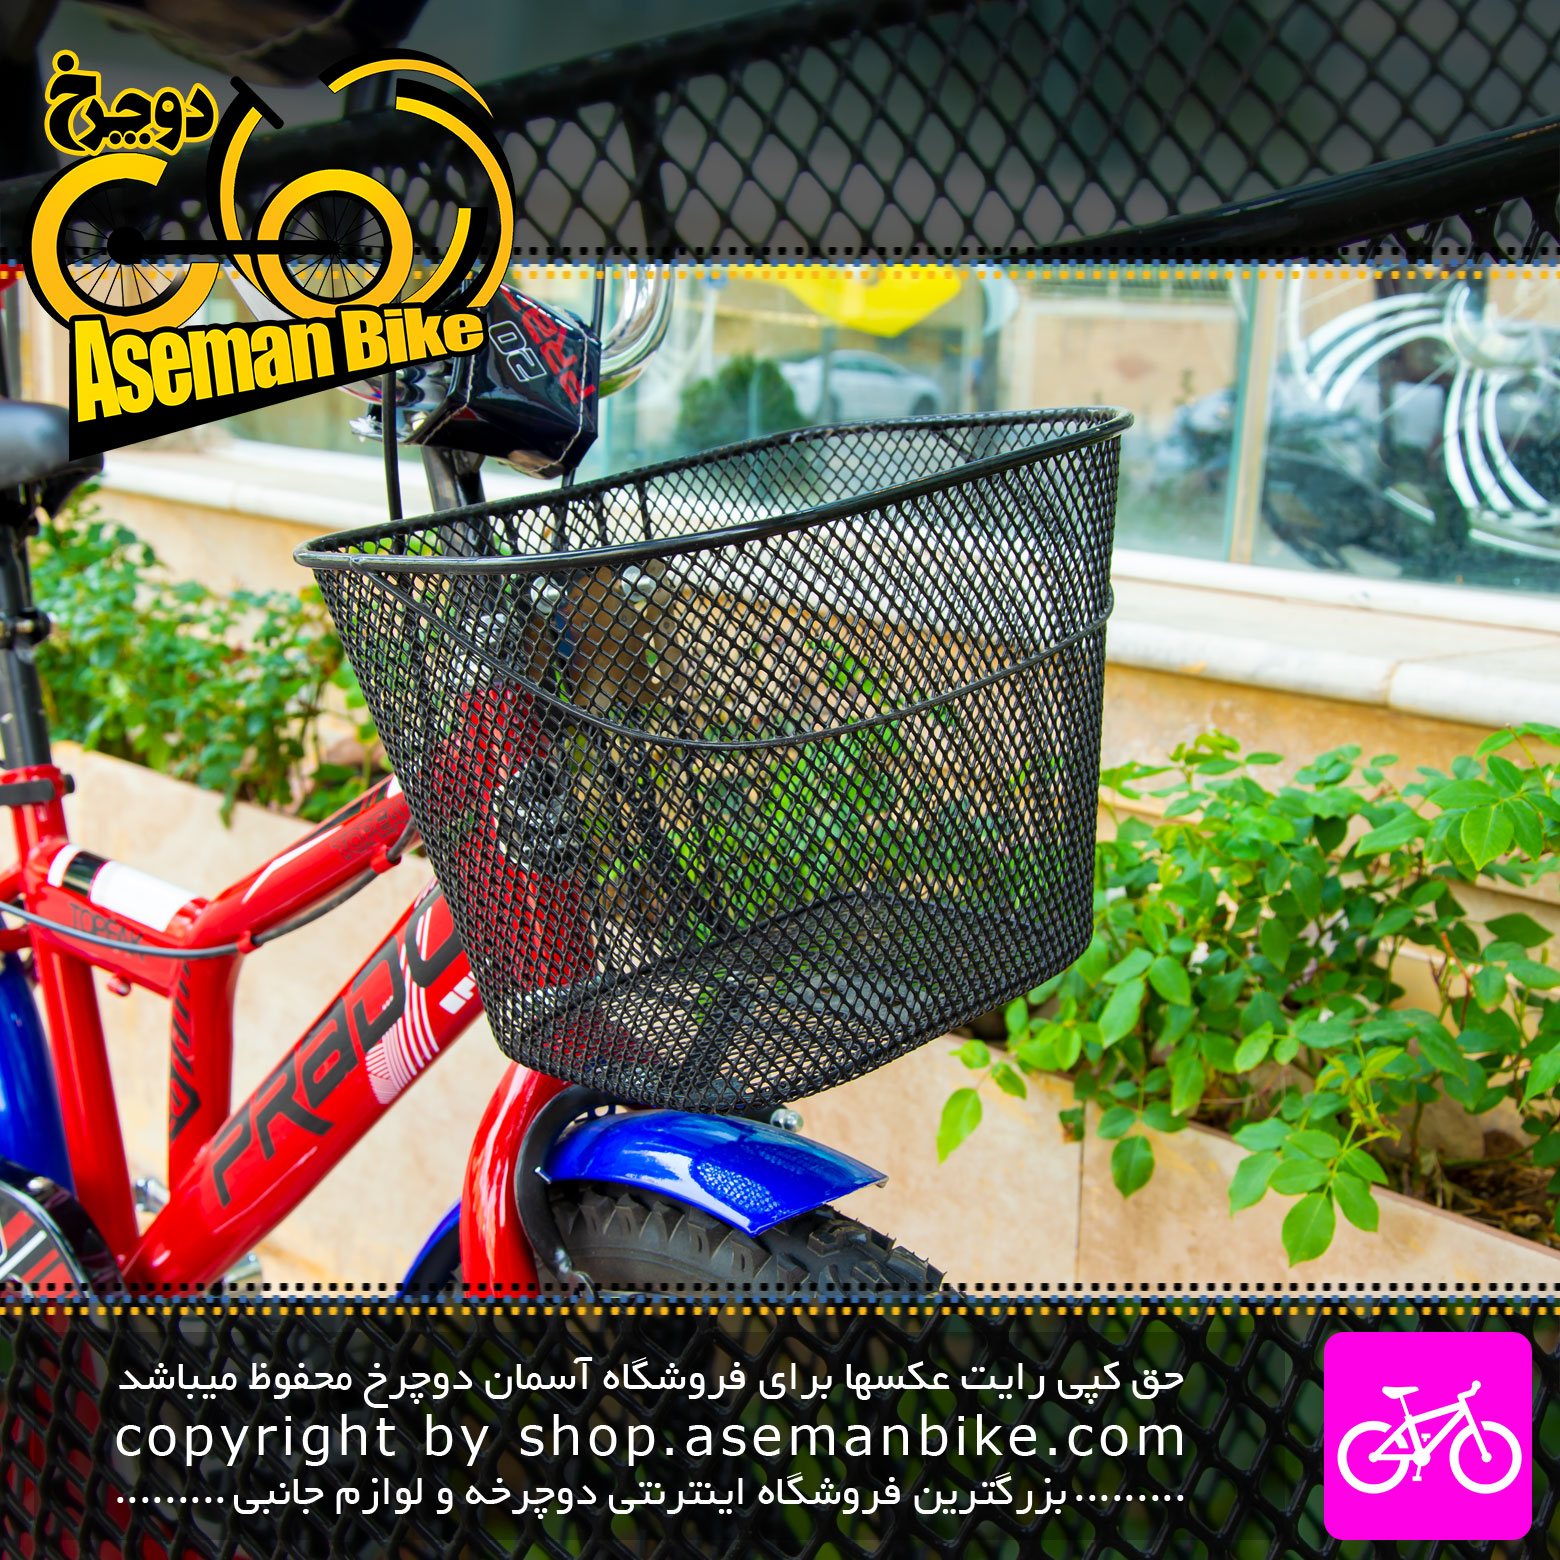 دوچرخه بچه گانه پرادو مدل تاپیک رنگ قرمز آبی سایز 20 Prado Kids Bicycle Topeak Size 20 Red Blue